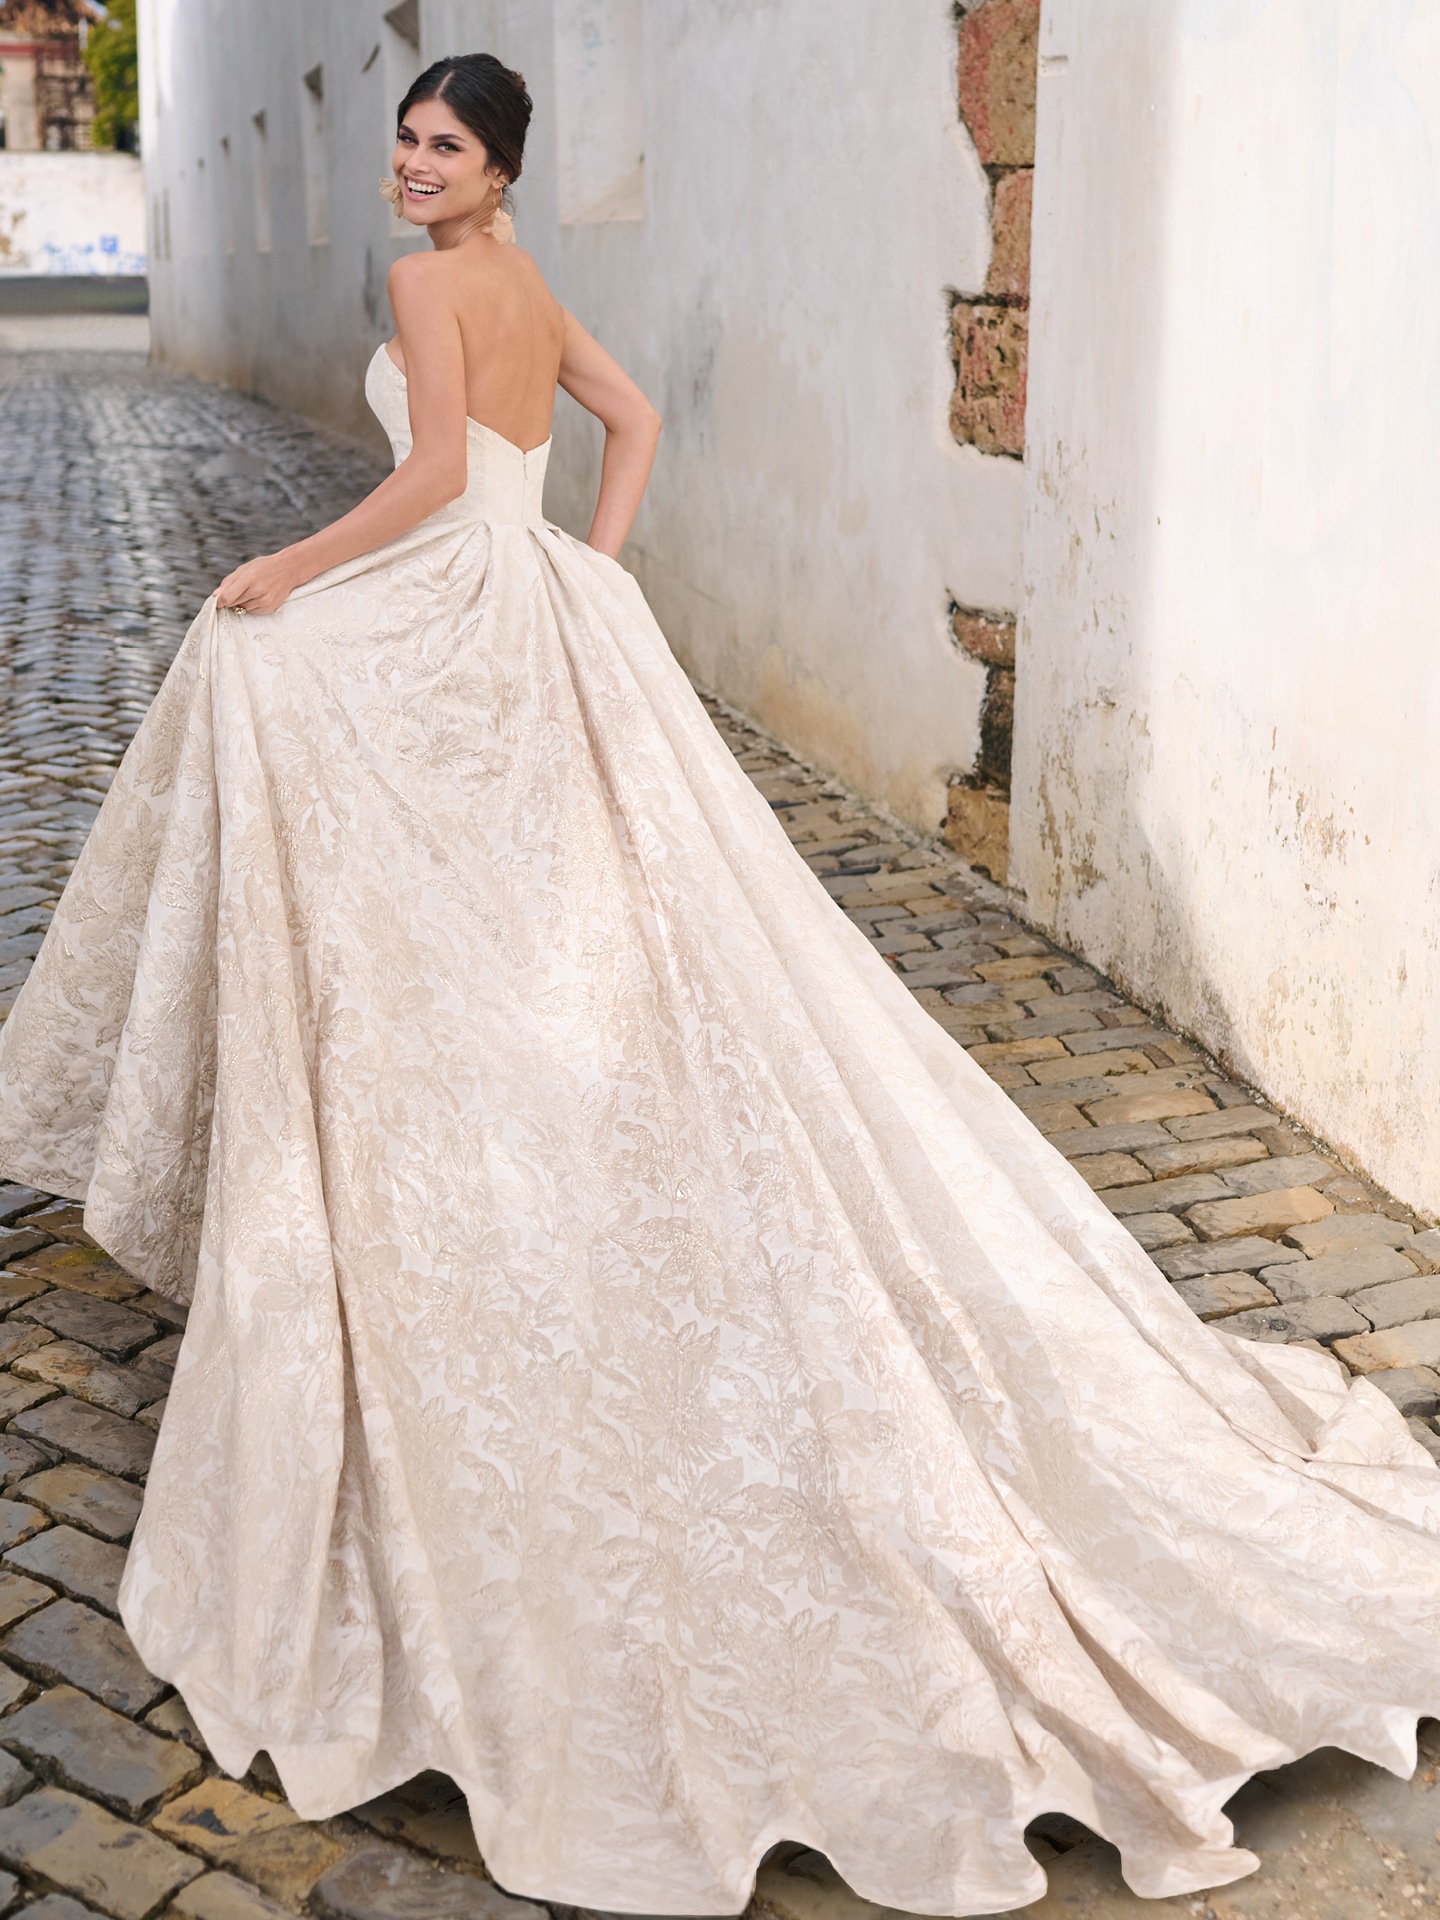 Premium Photo  Beautiful and elegant wedding dress